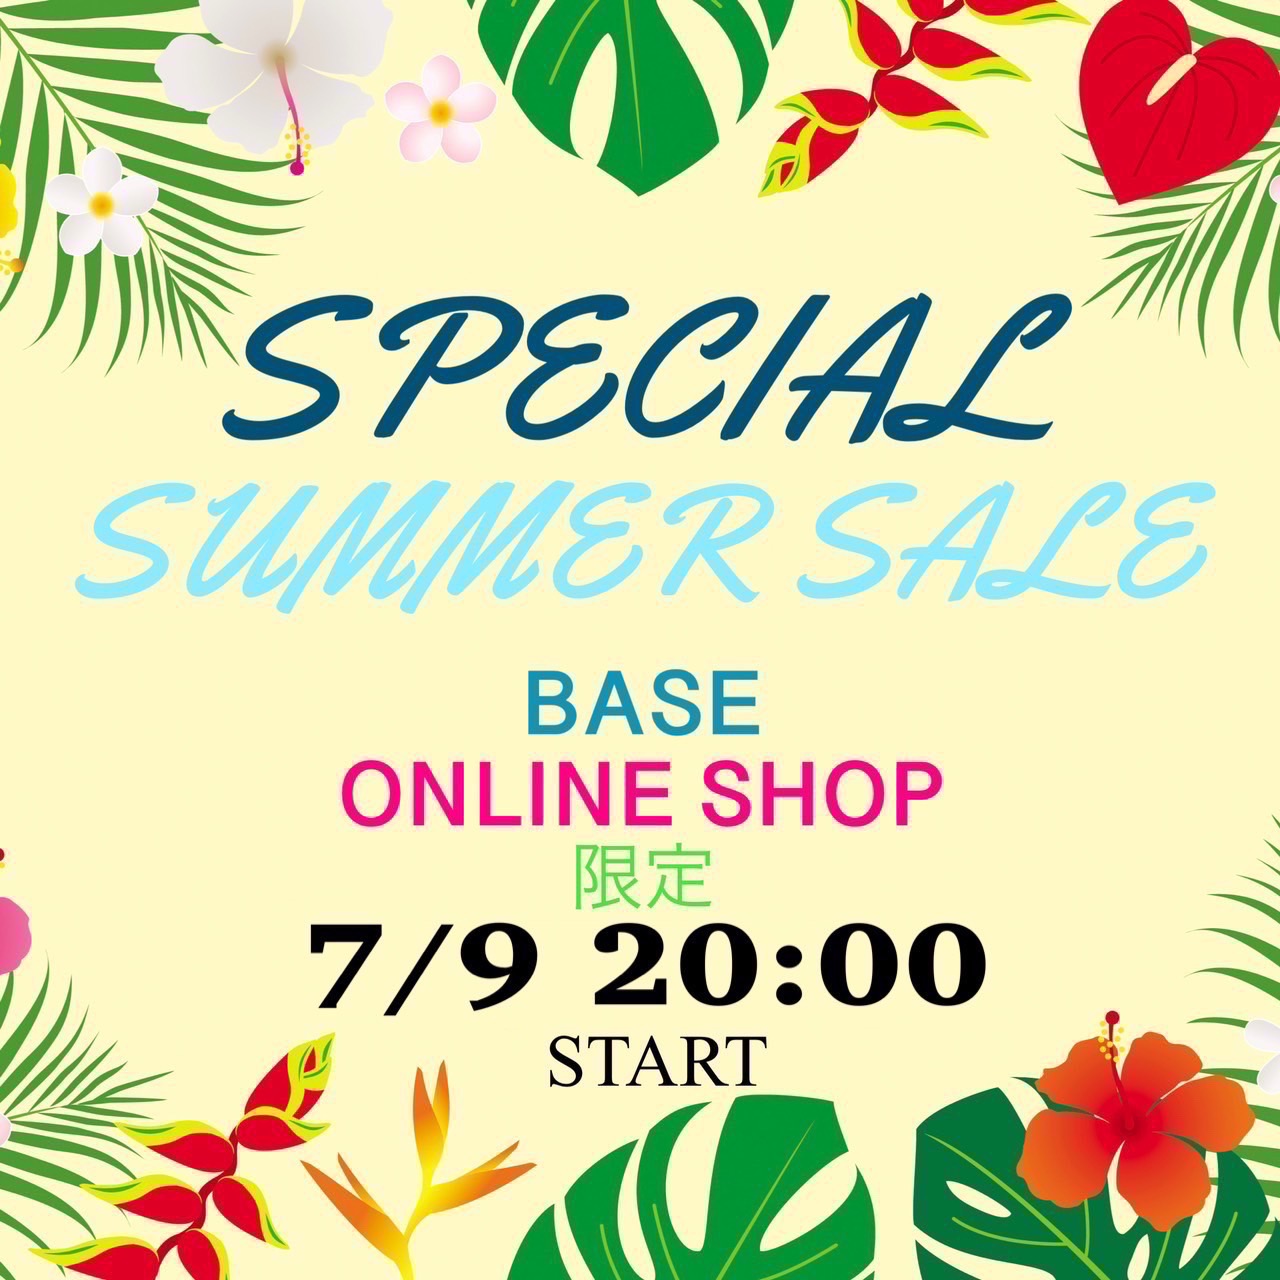 【SAFARI BASE ONLINE SHOP限定】 SPECIAL SUMMER SALE !!